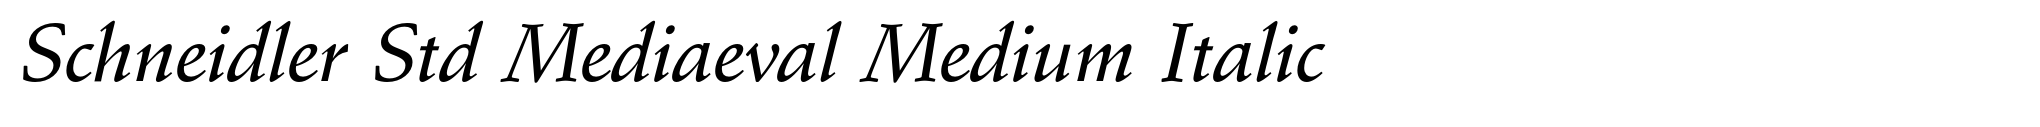 Schneidler Std Mediaeval Medium Italic image